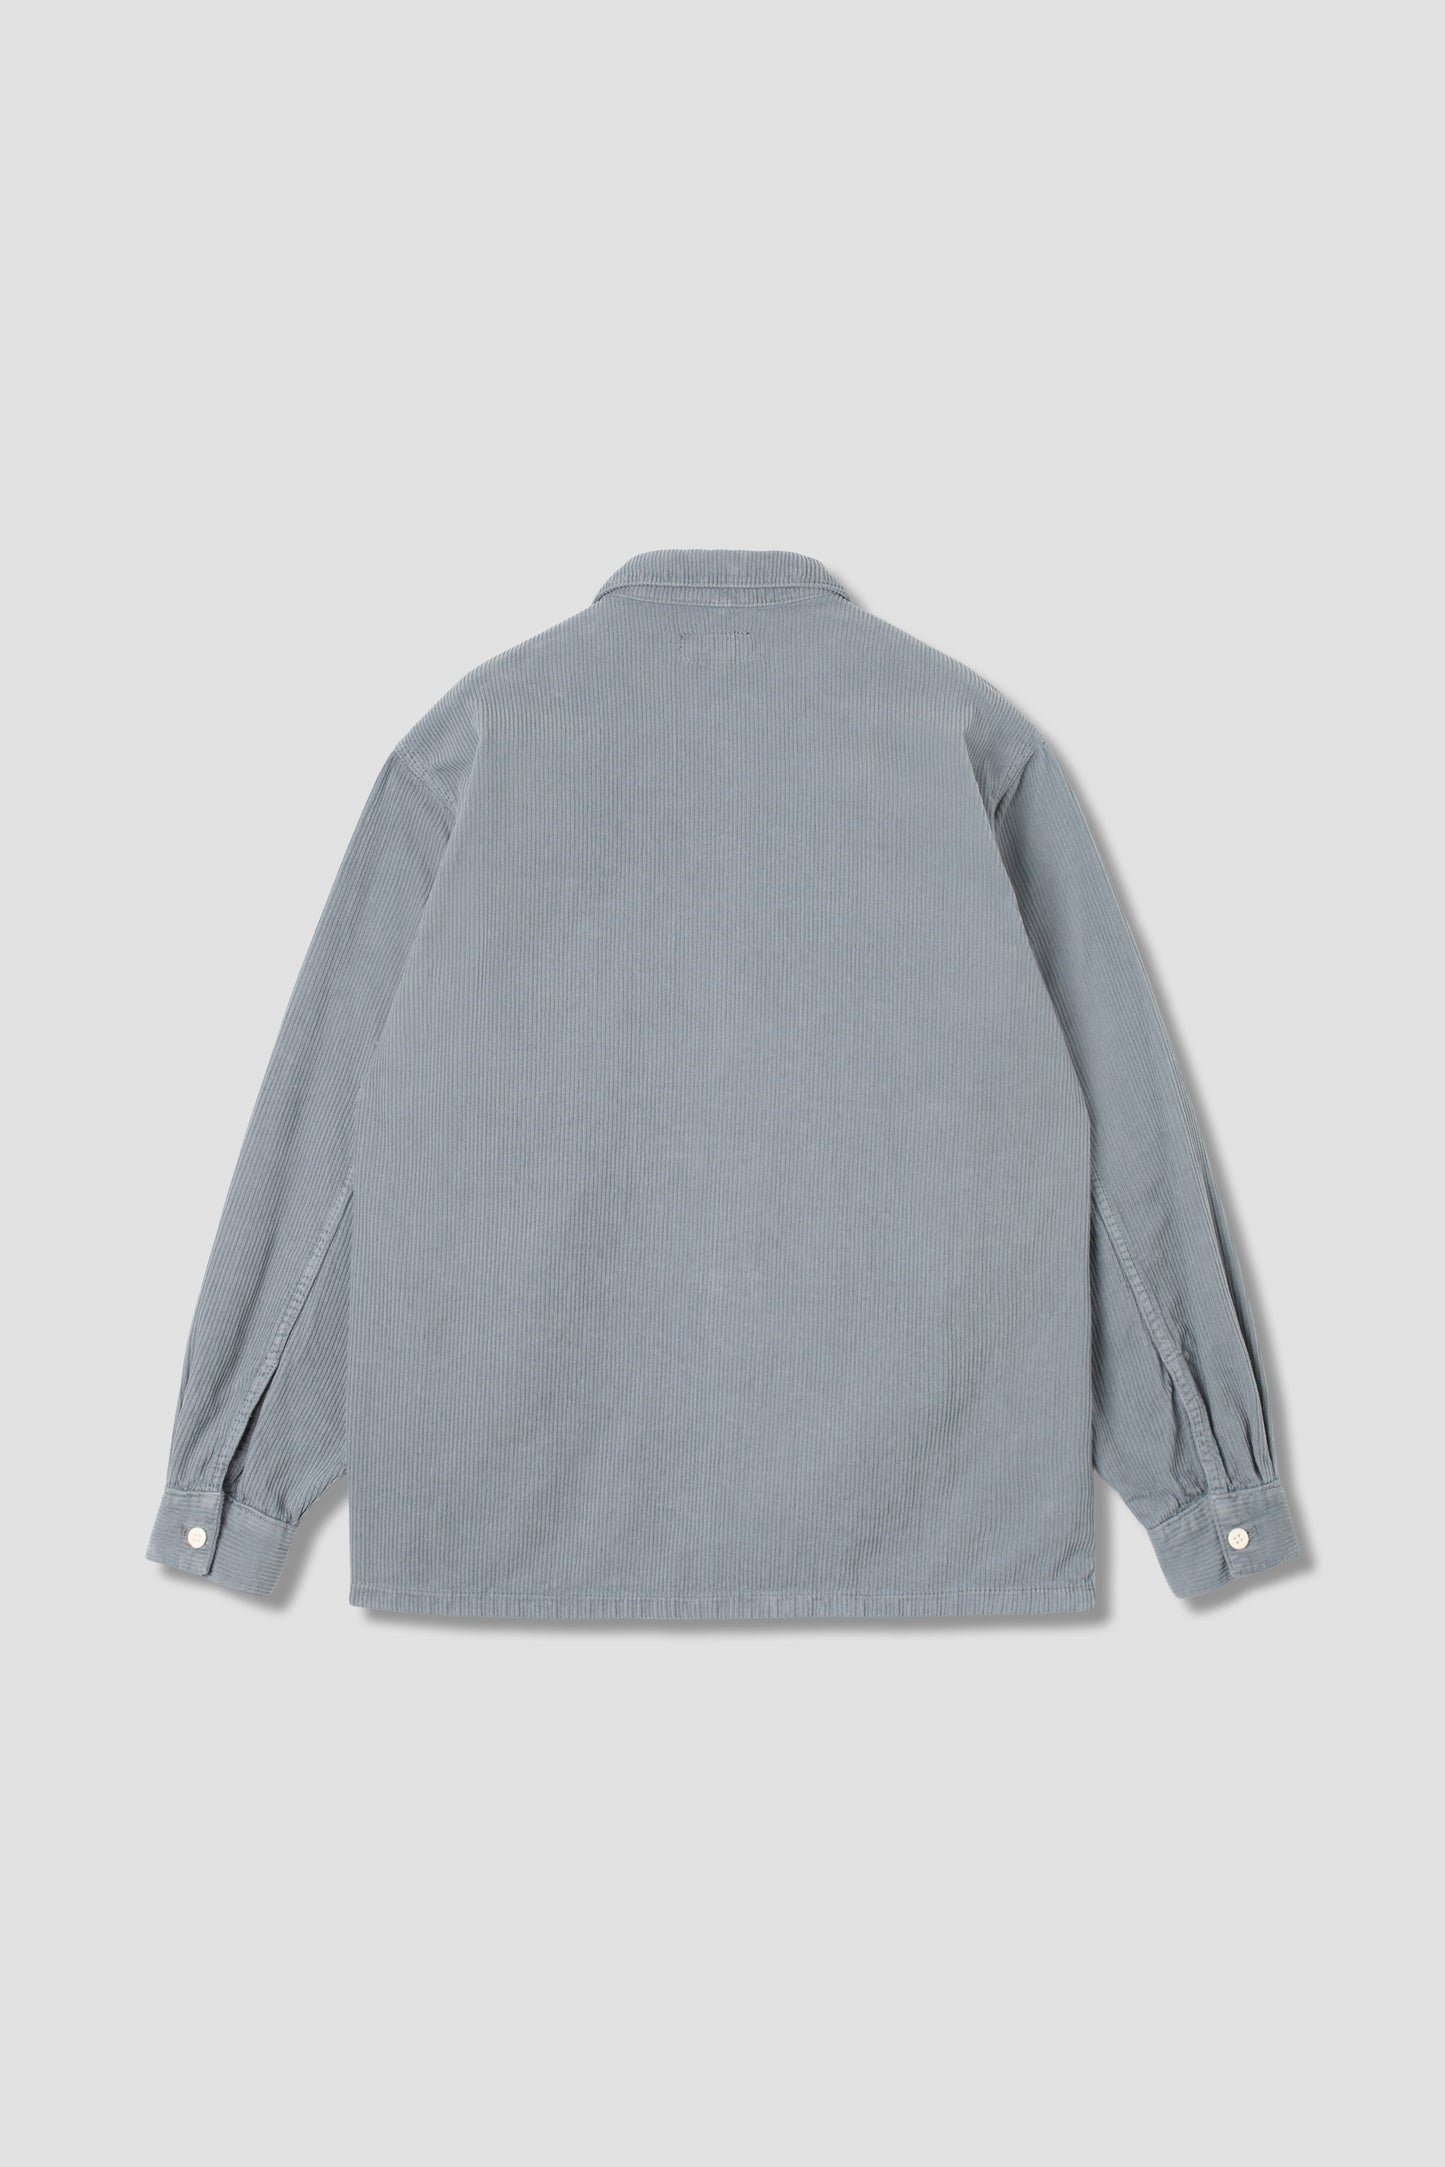 CPO Shirt (Battle Grey Cord)